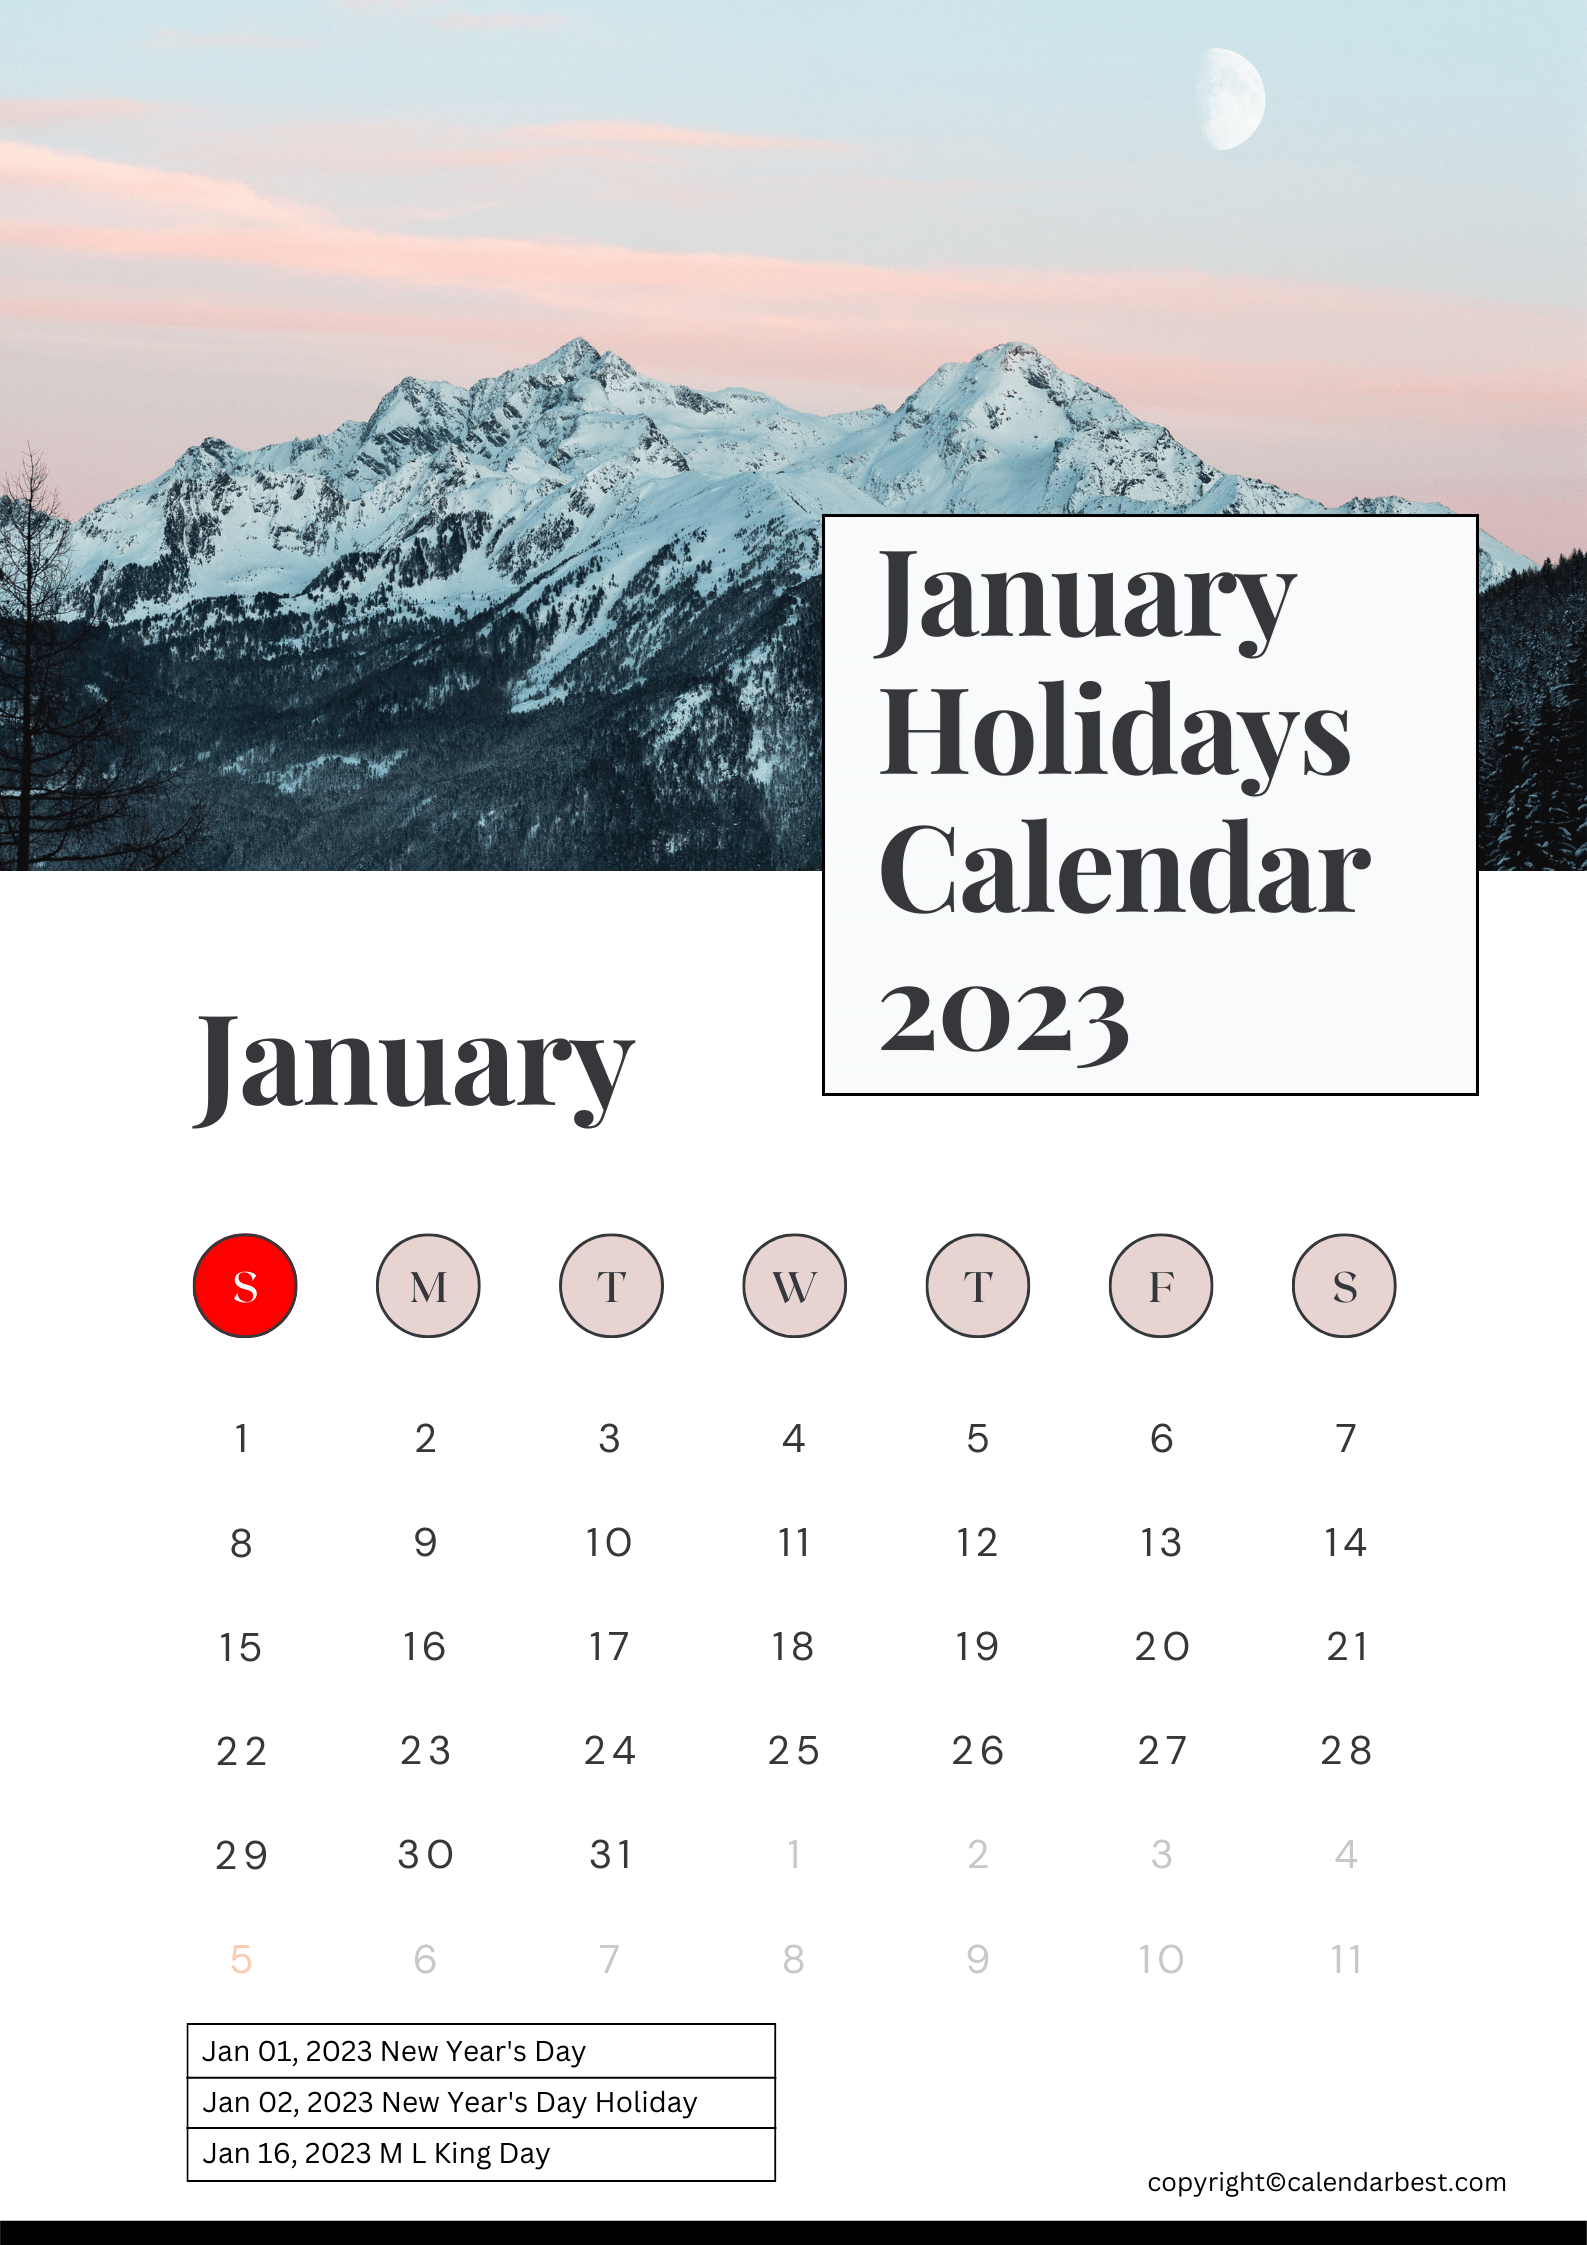 January Holidays Calendar 2023 Printable Template in PDF